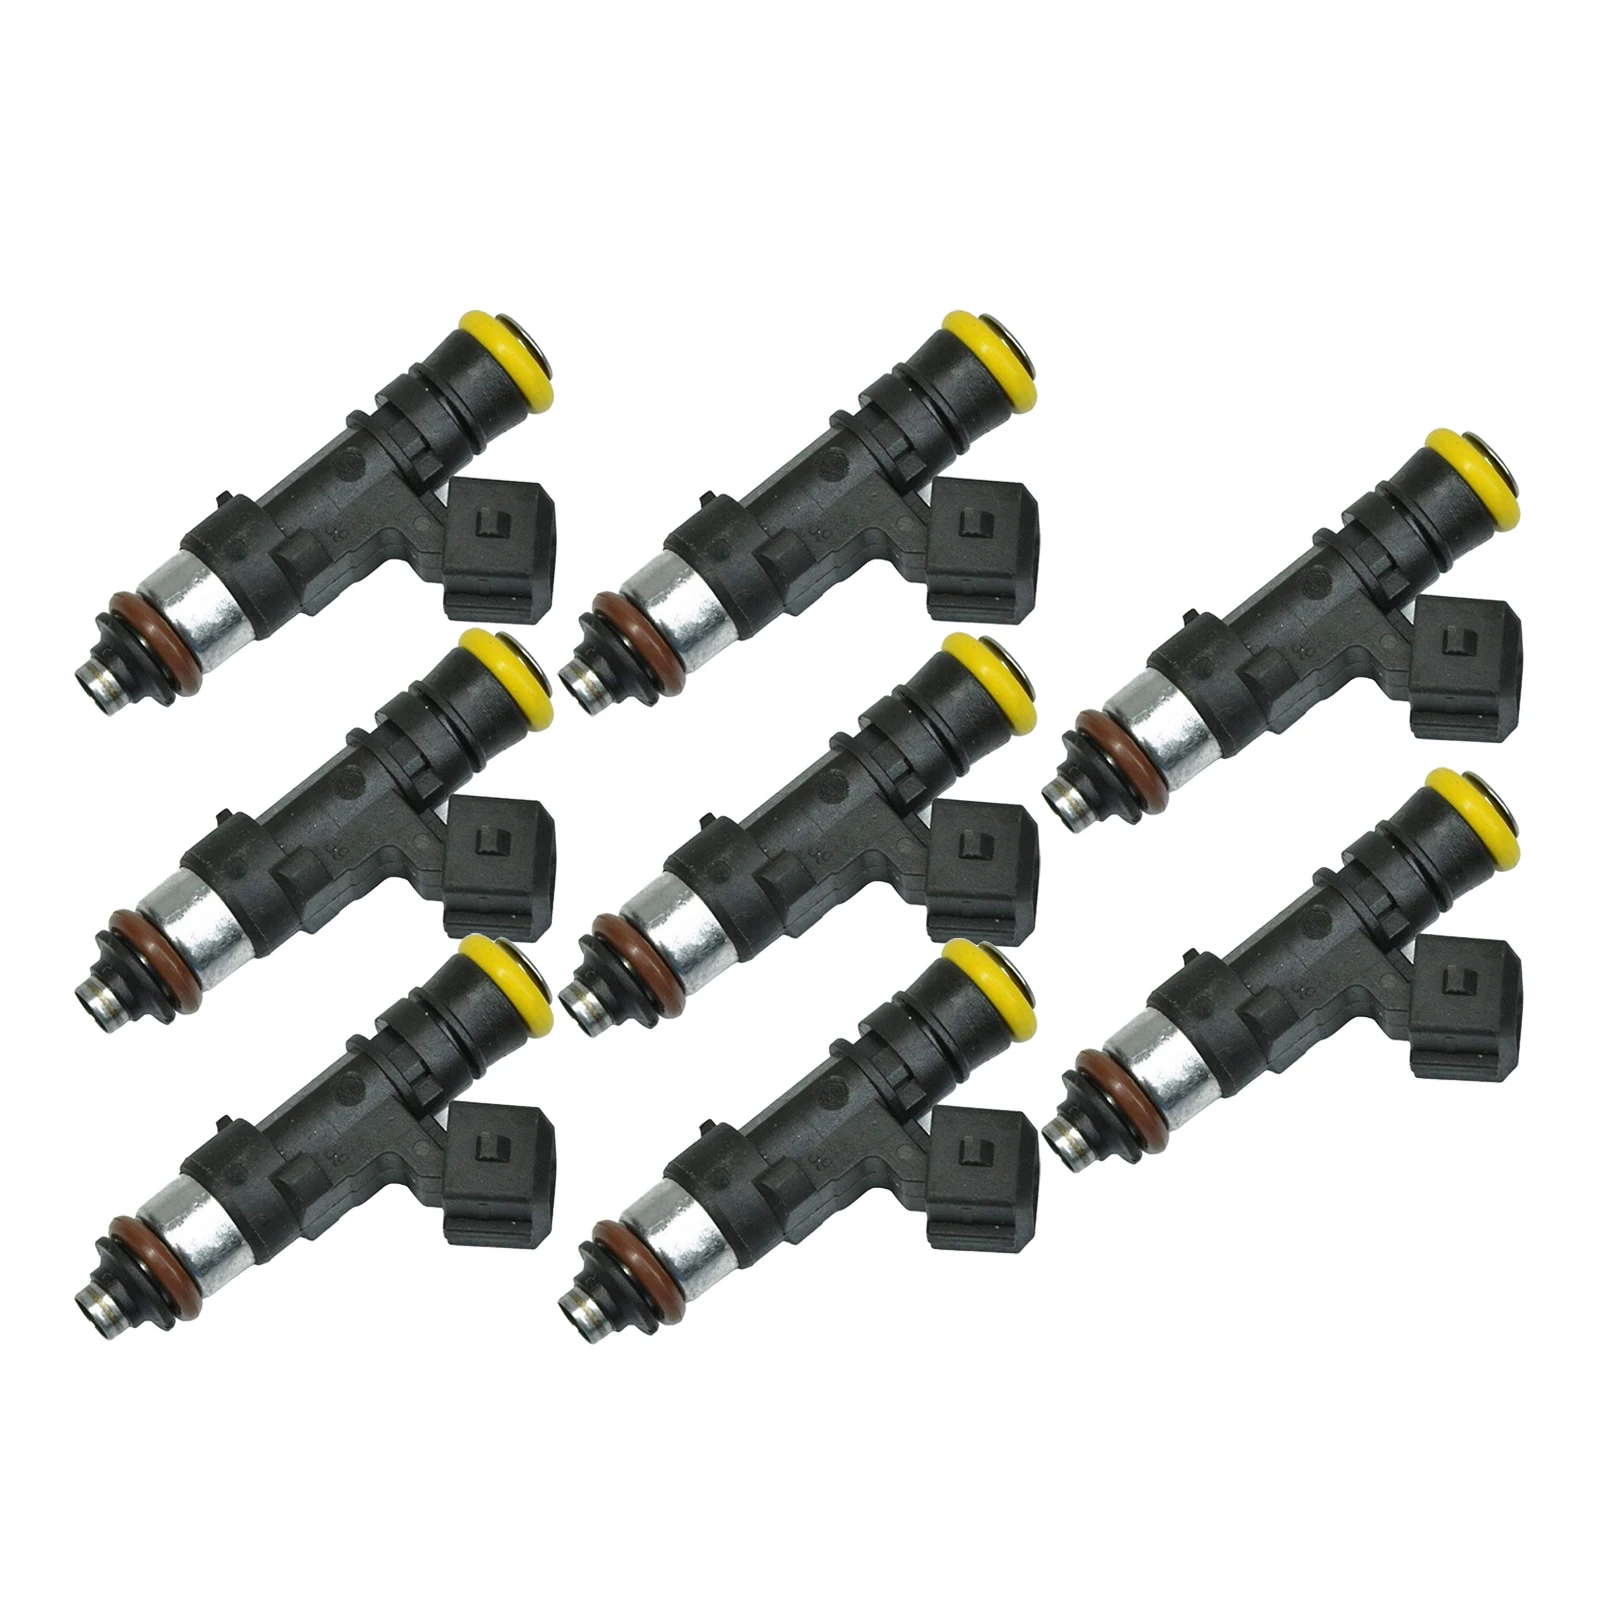 8Packs High Impedance Fuel Injectors EV1 Connector 210lb 2200cc 0280158829 for Honda Audi, Material: Metal & composite plastic